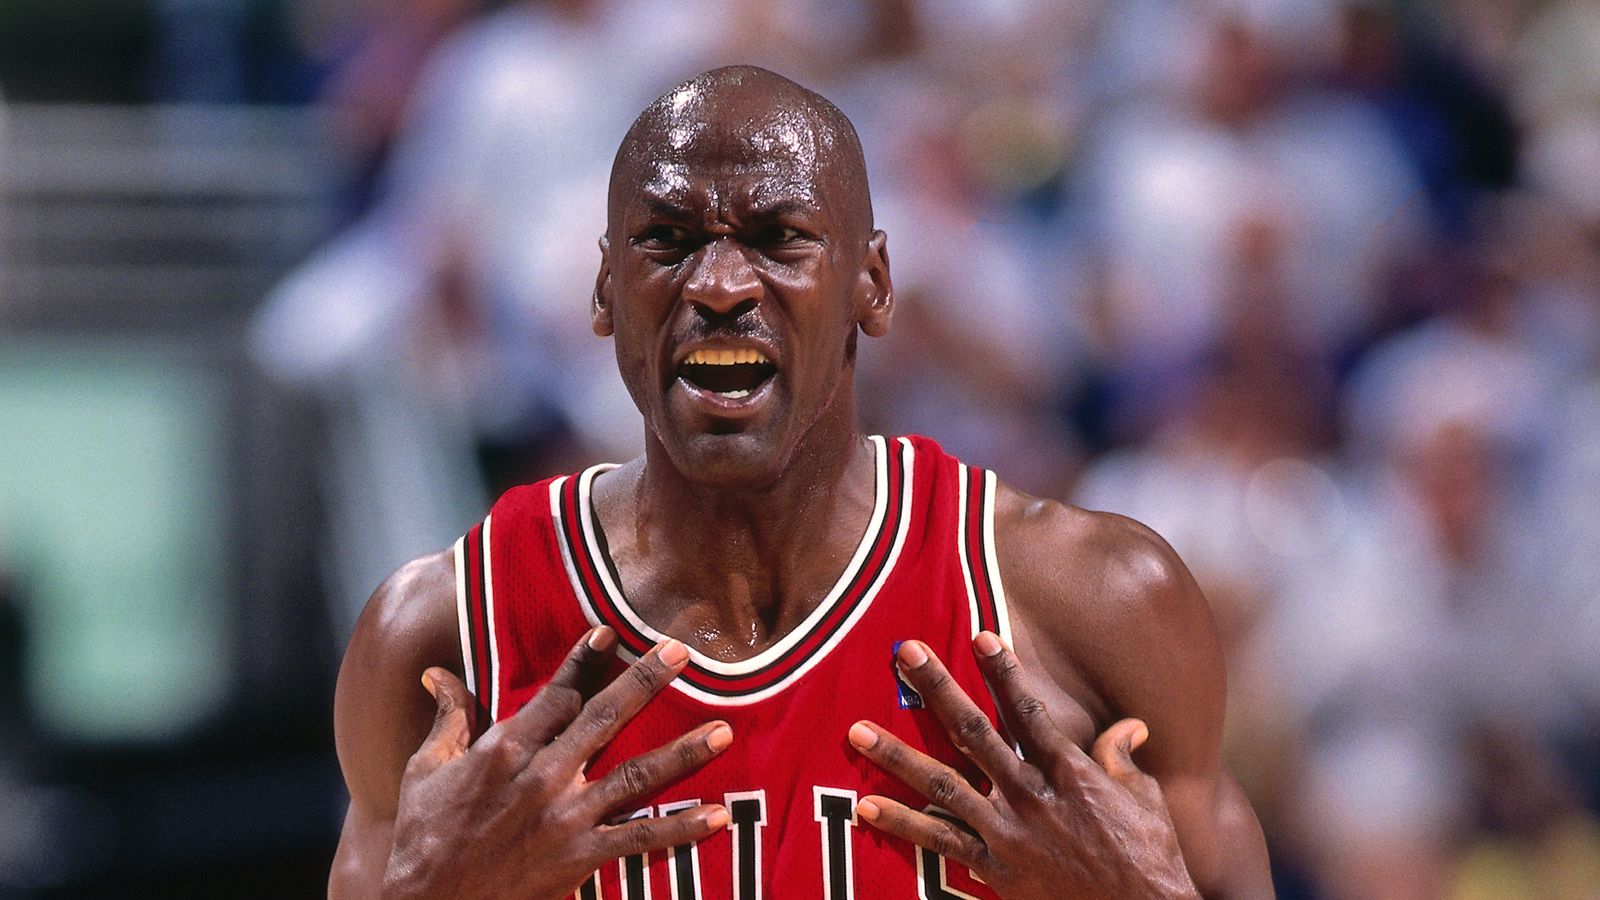 97-98 Michael Jordan Sign of the Times